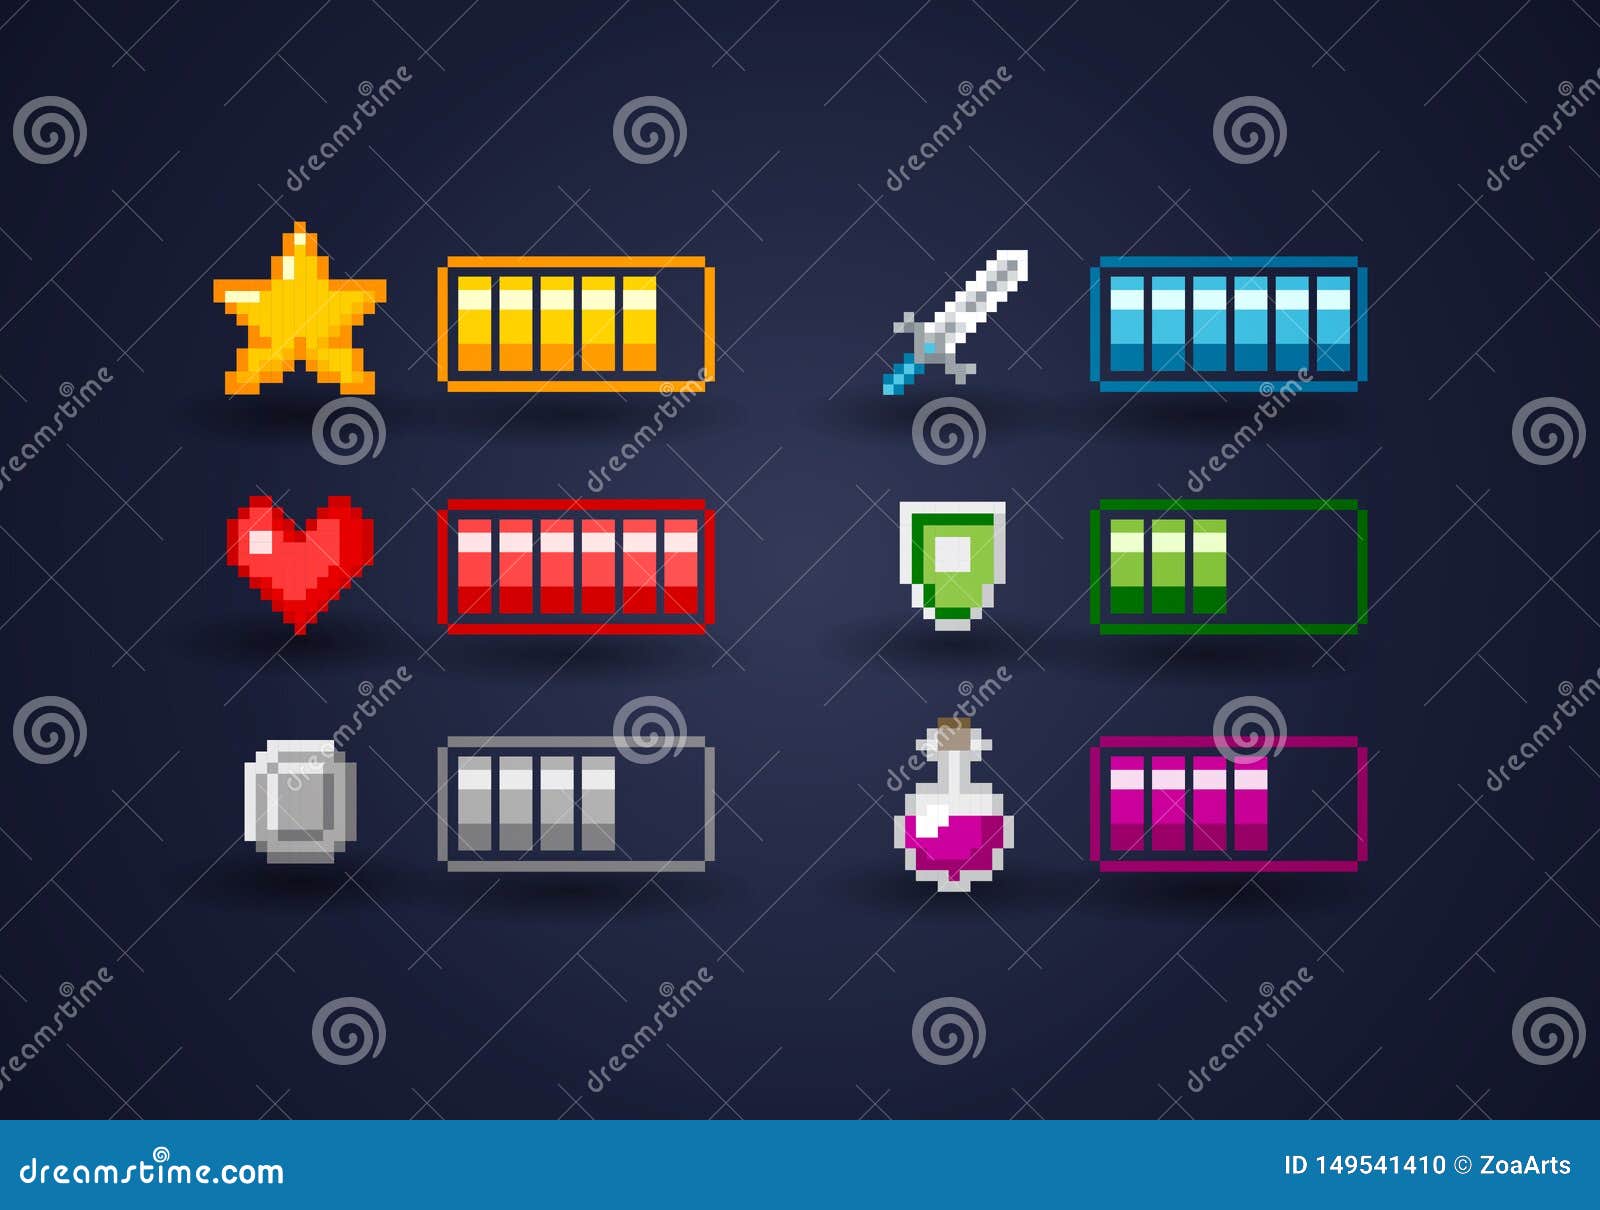  vecor pixel art video game interface icon set